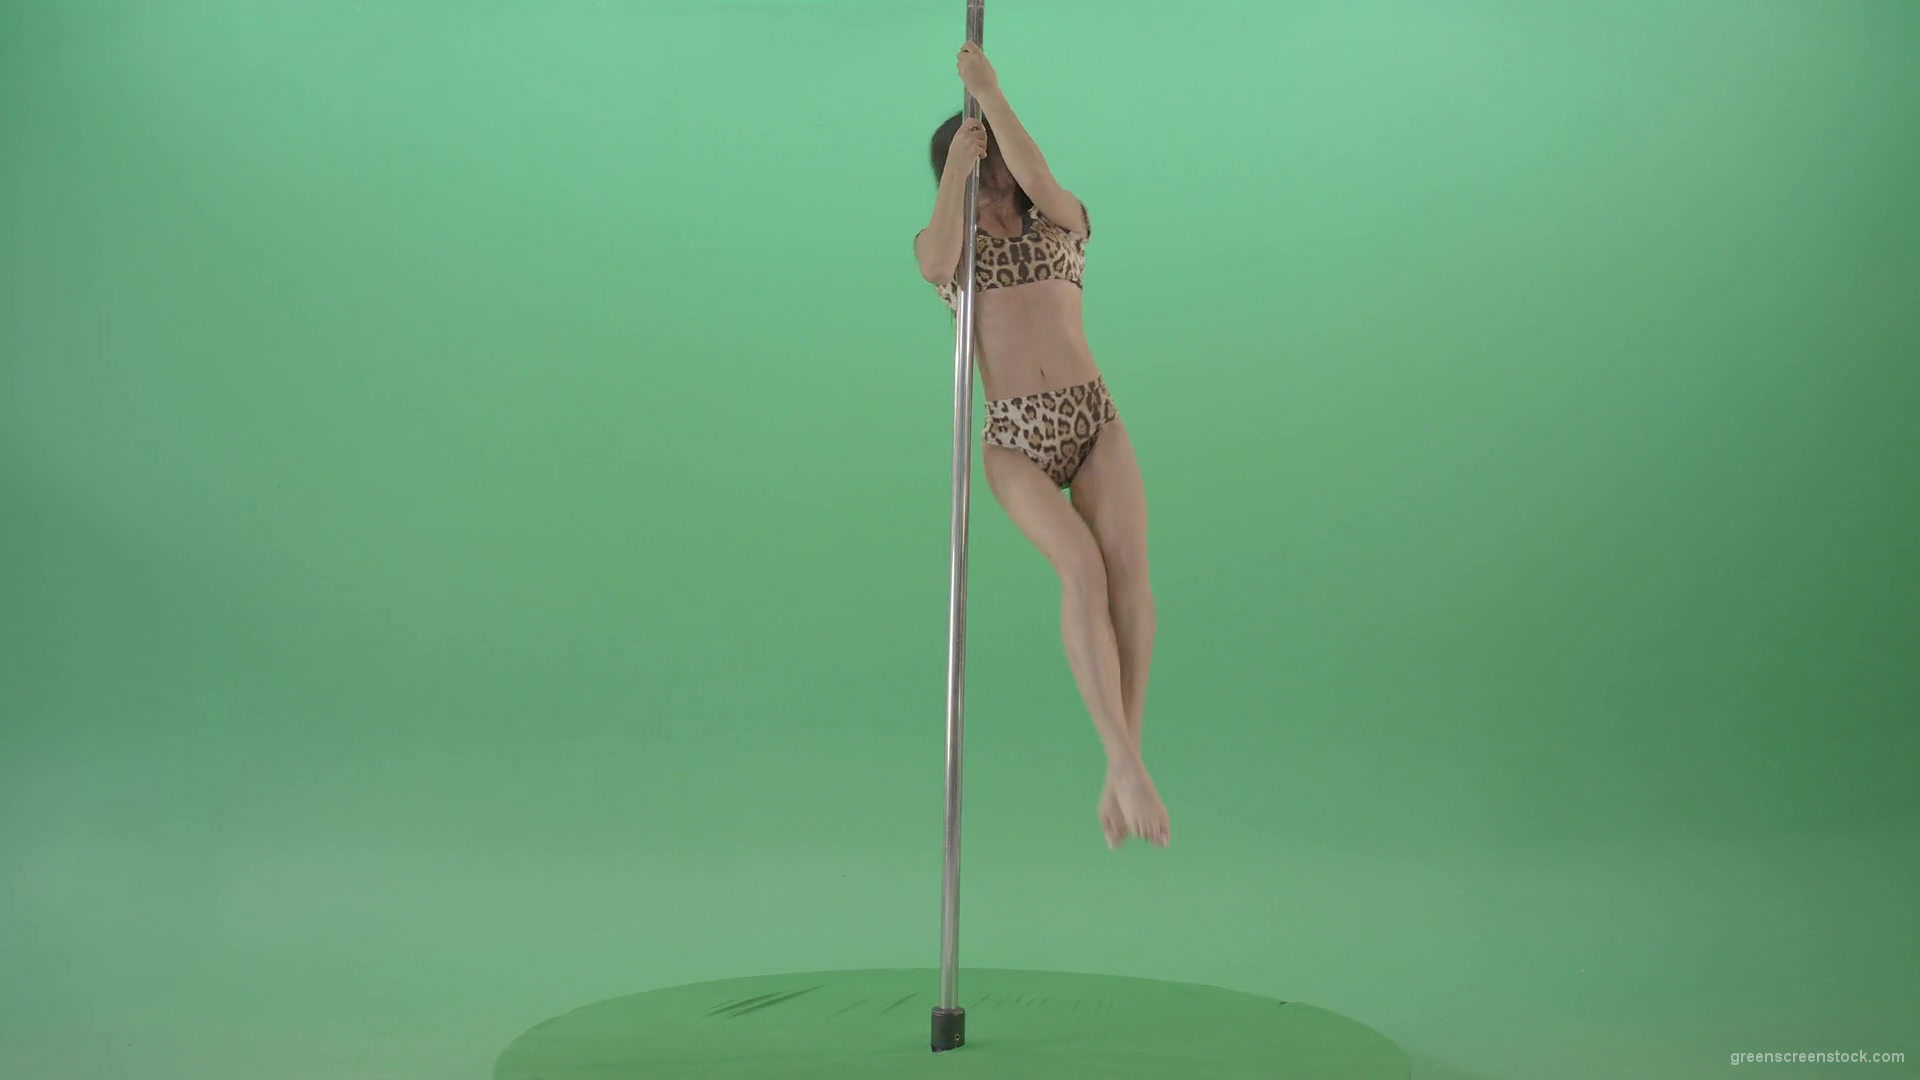 Athletic-sexy-female-model-spinning-on-pilon-in-jaguar-skin-underwear-dancing-pole-dance-on-Green-Screen-4K-Video-Footage-1920_009 Green Screen Stock